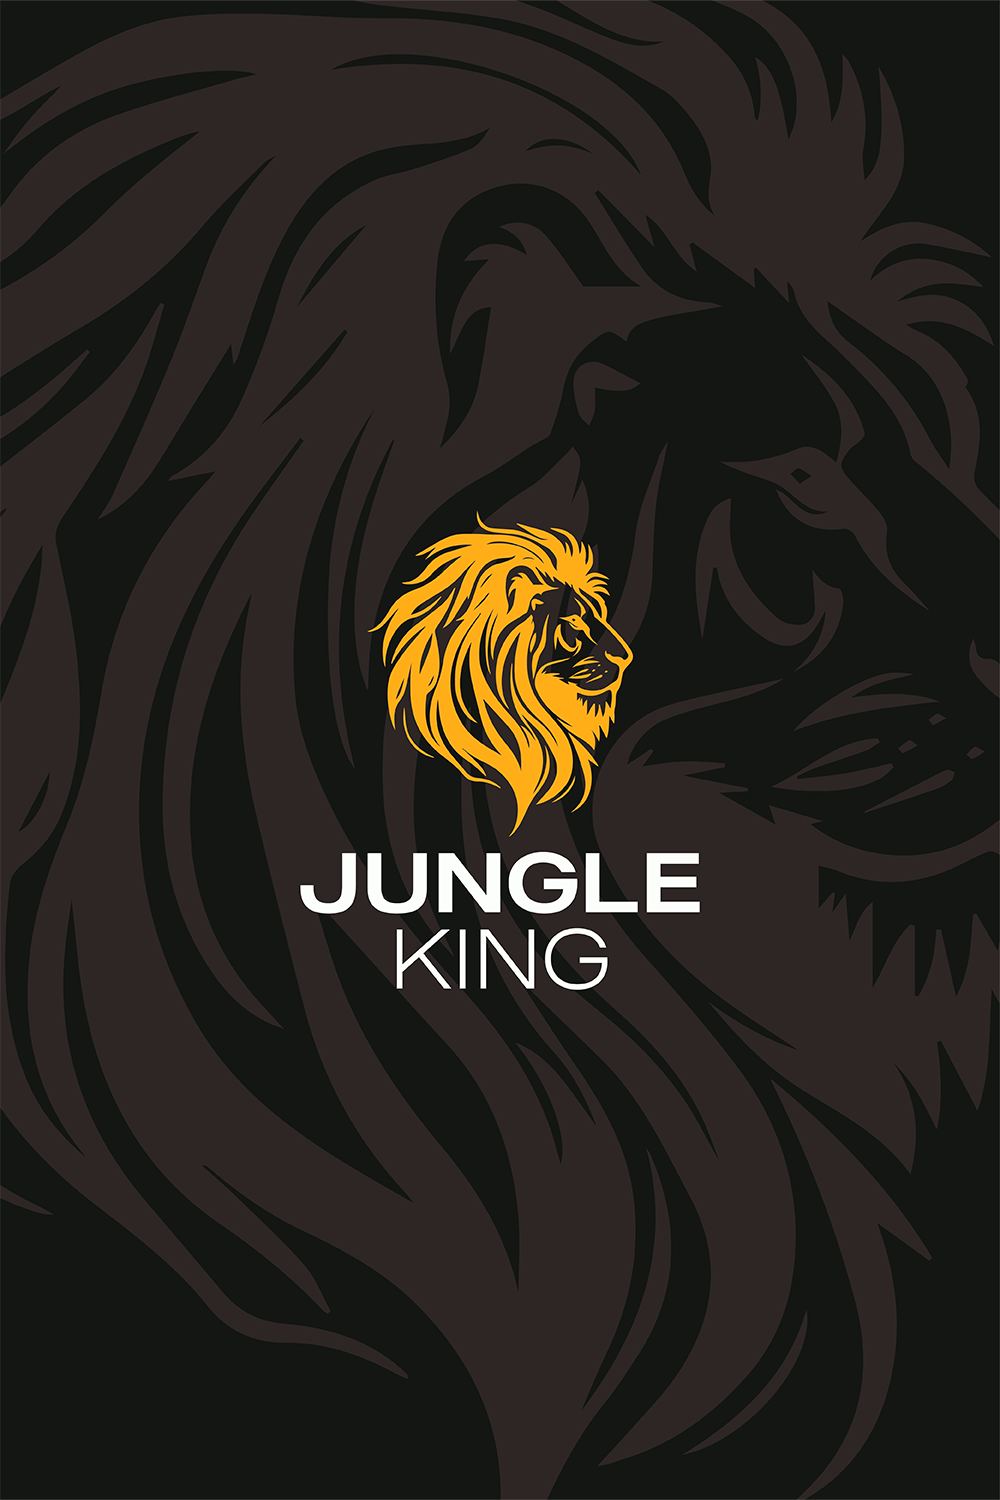 LION LOGO - JUNGLE KING pinterest preview image.